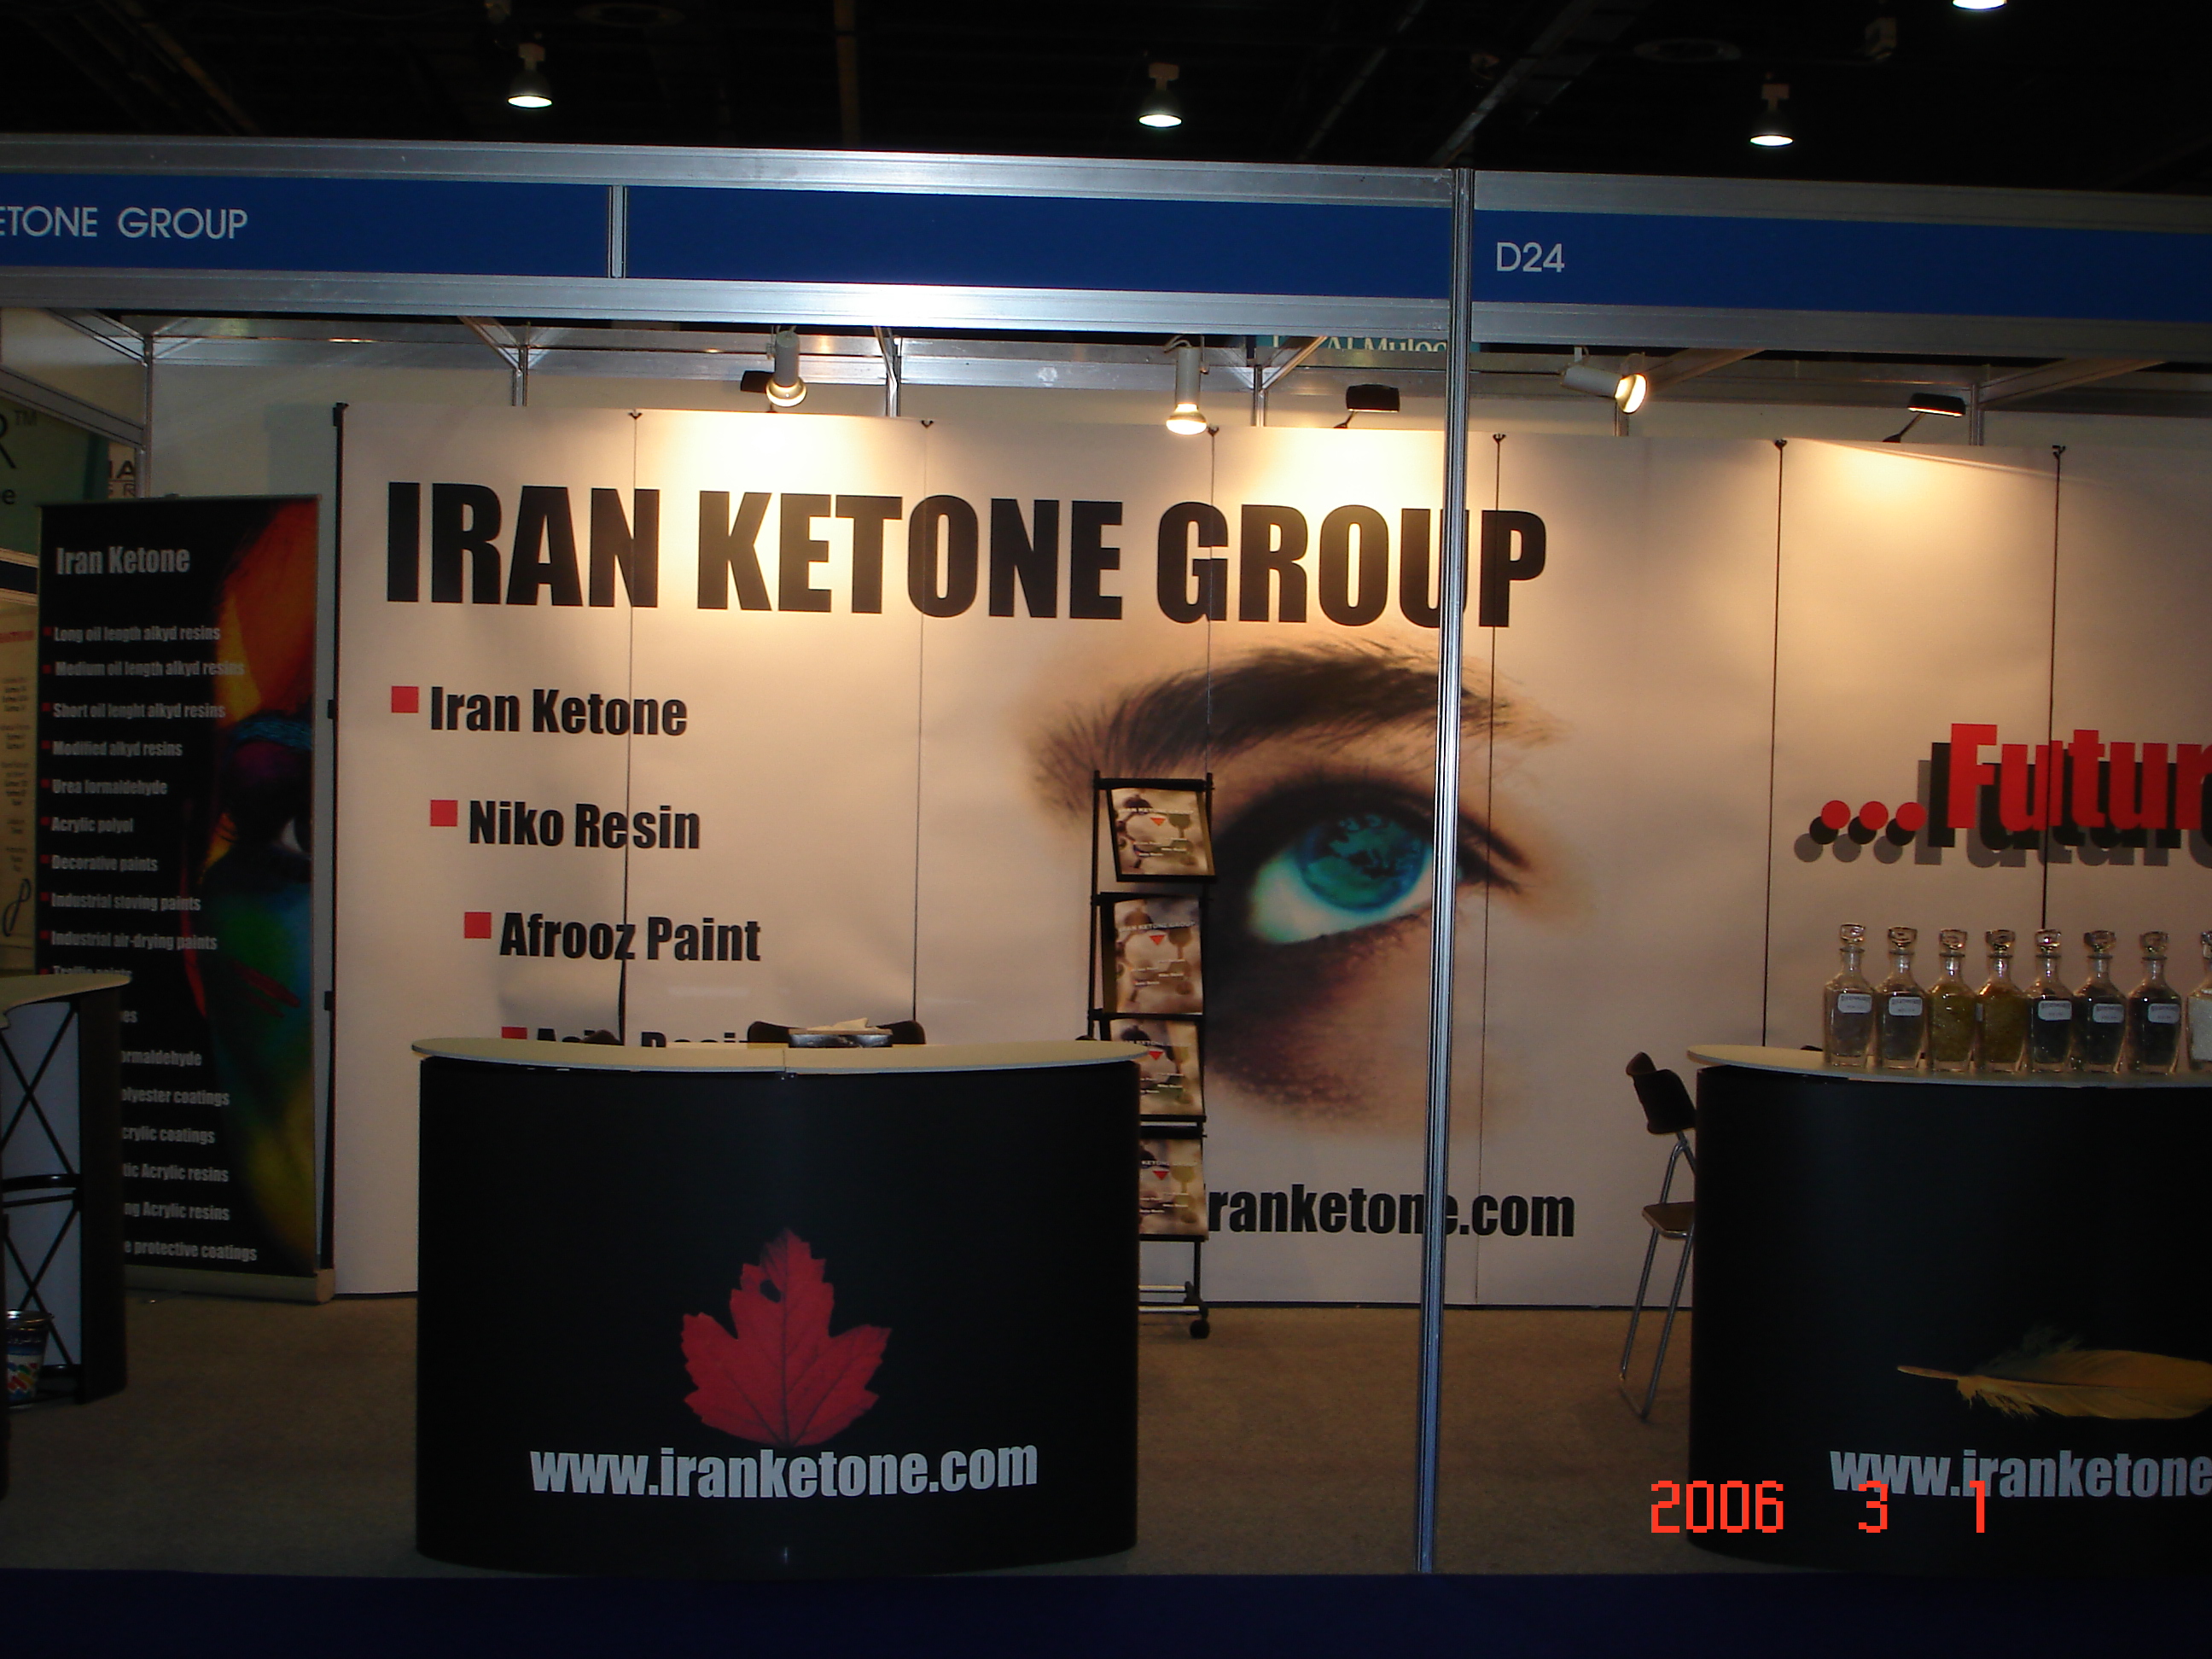 Dubai Exhibition 2005